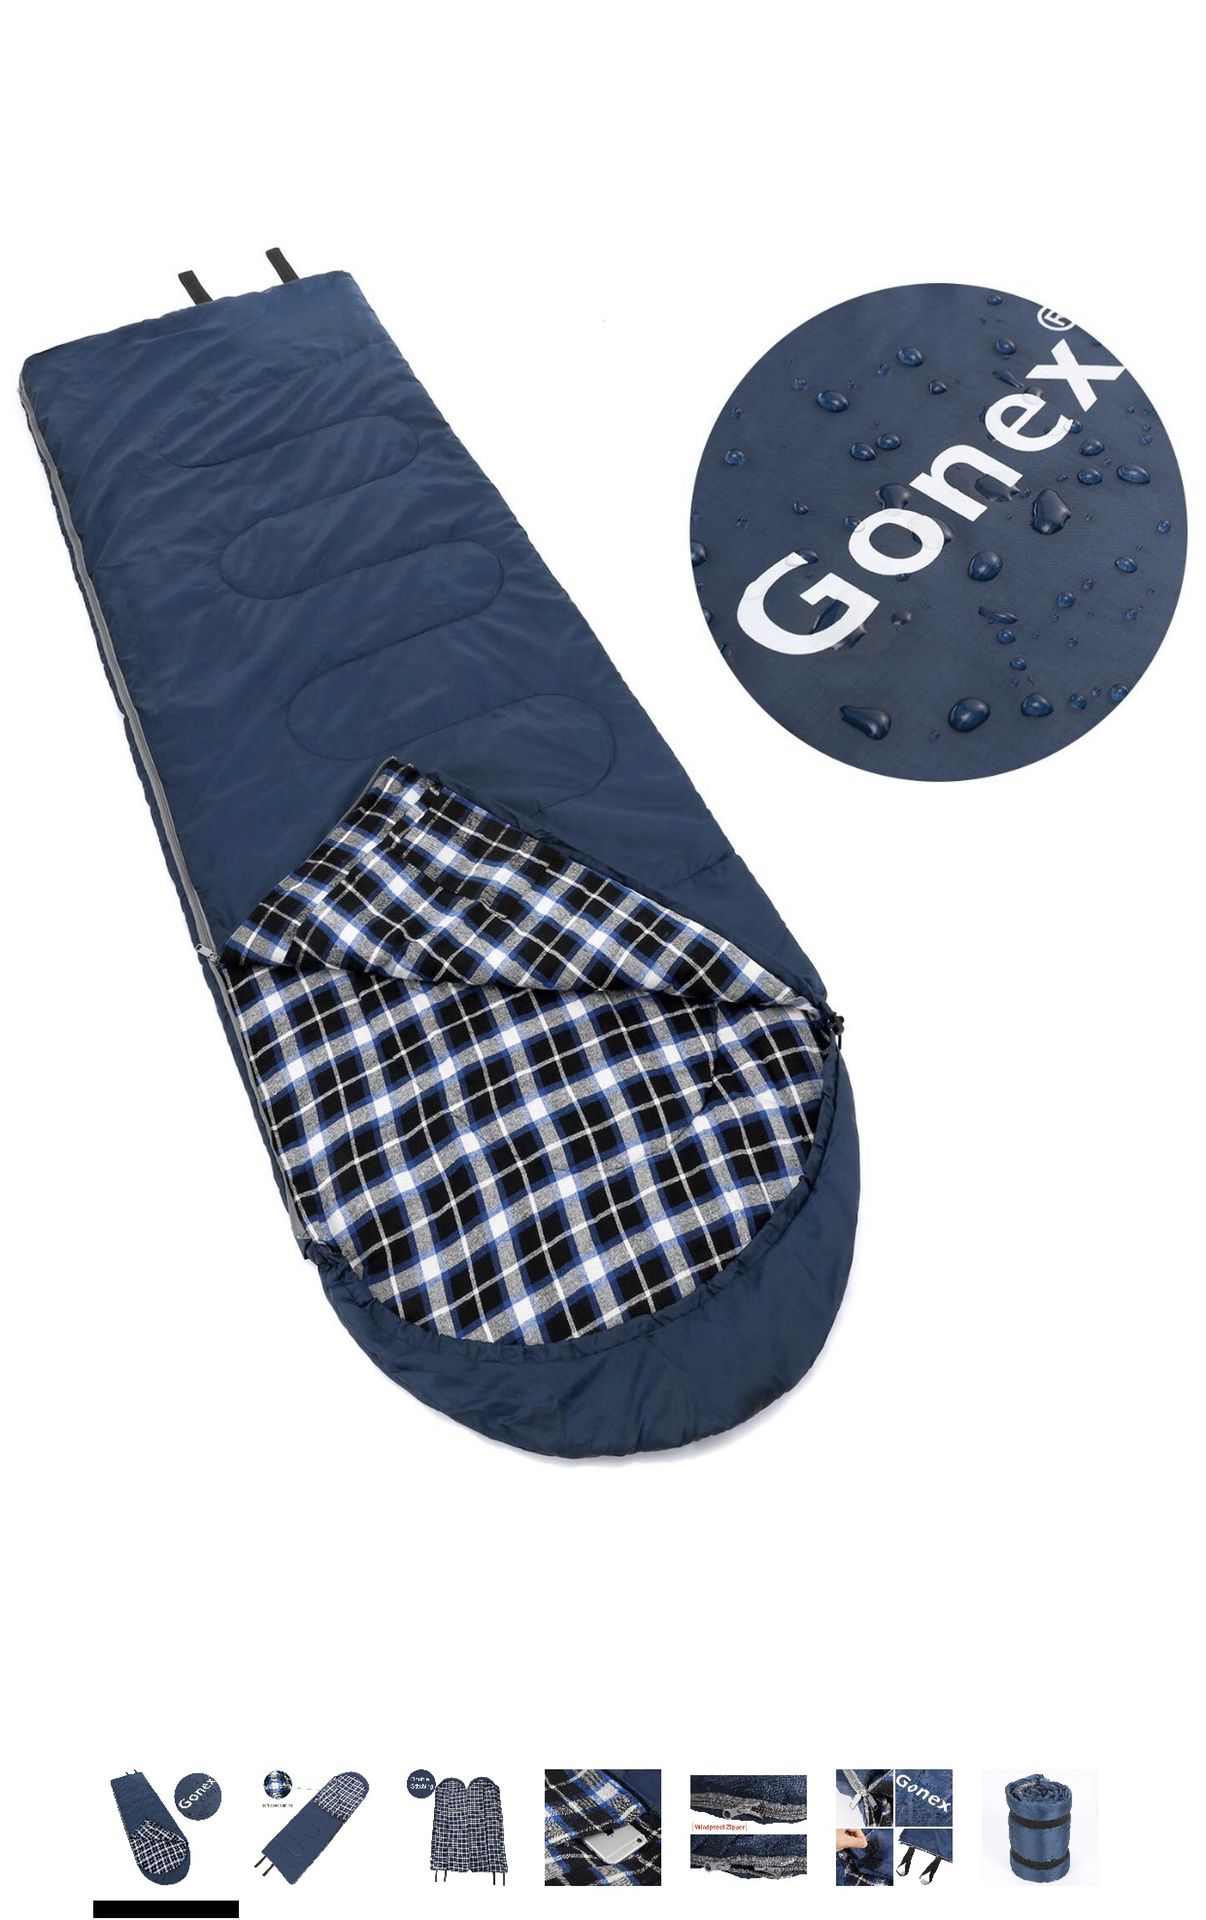 Gonex 3 season sleeping bag- $10